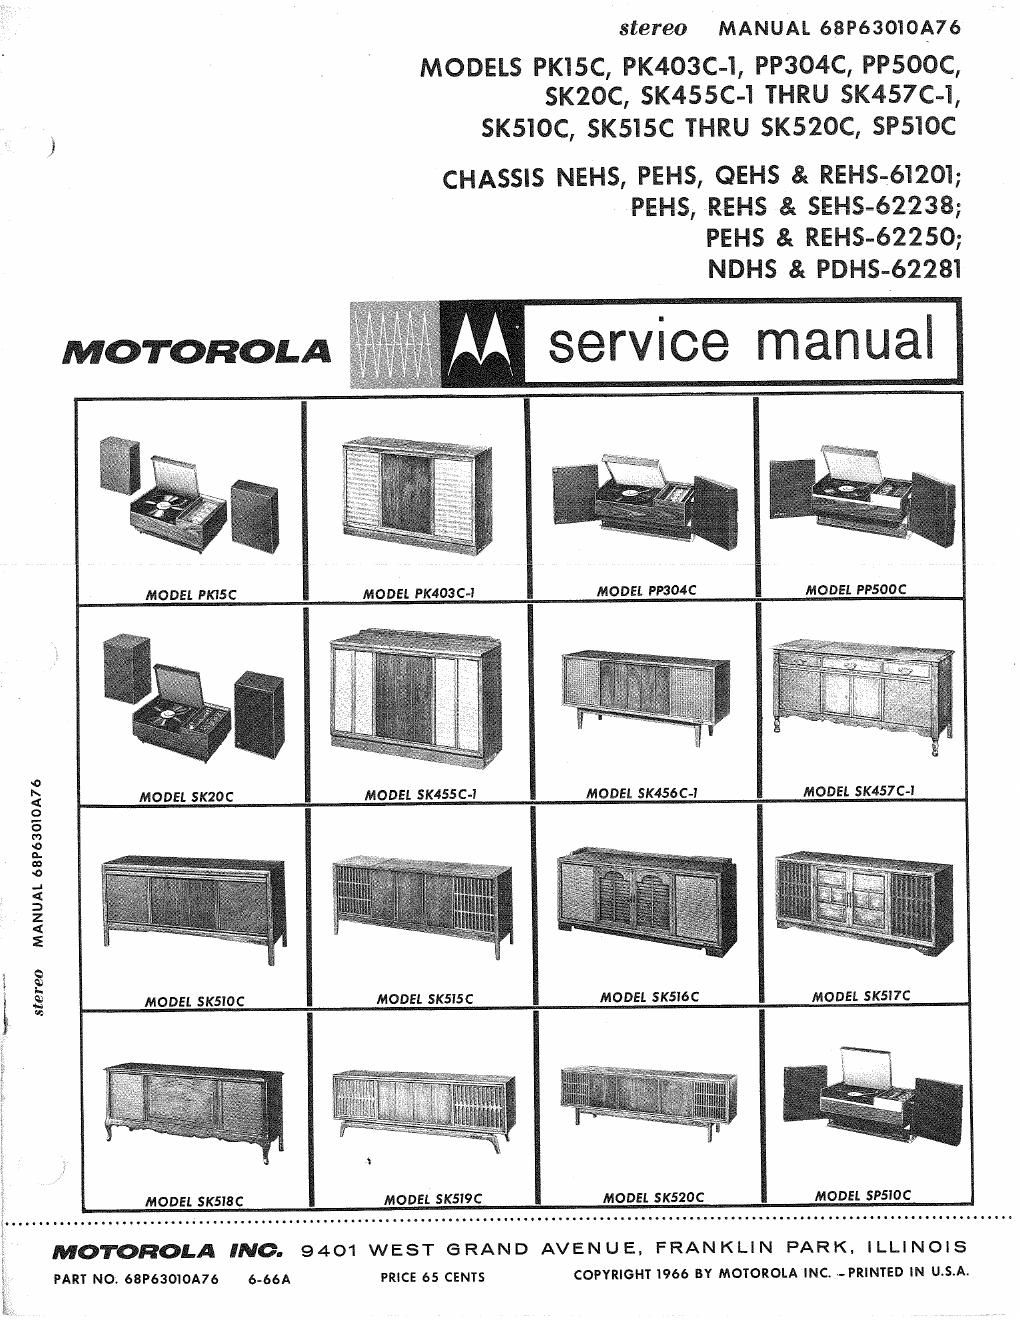 motorola sk 515 c service manual